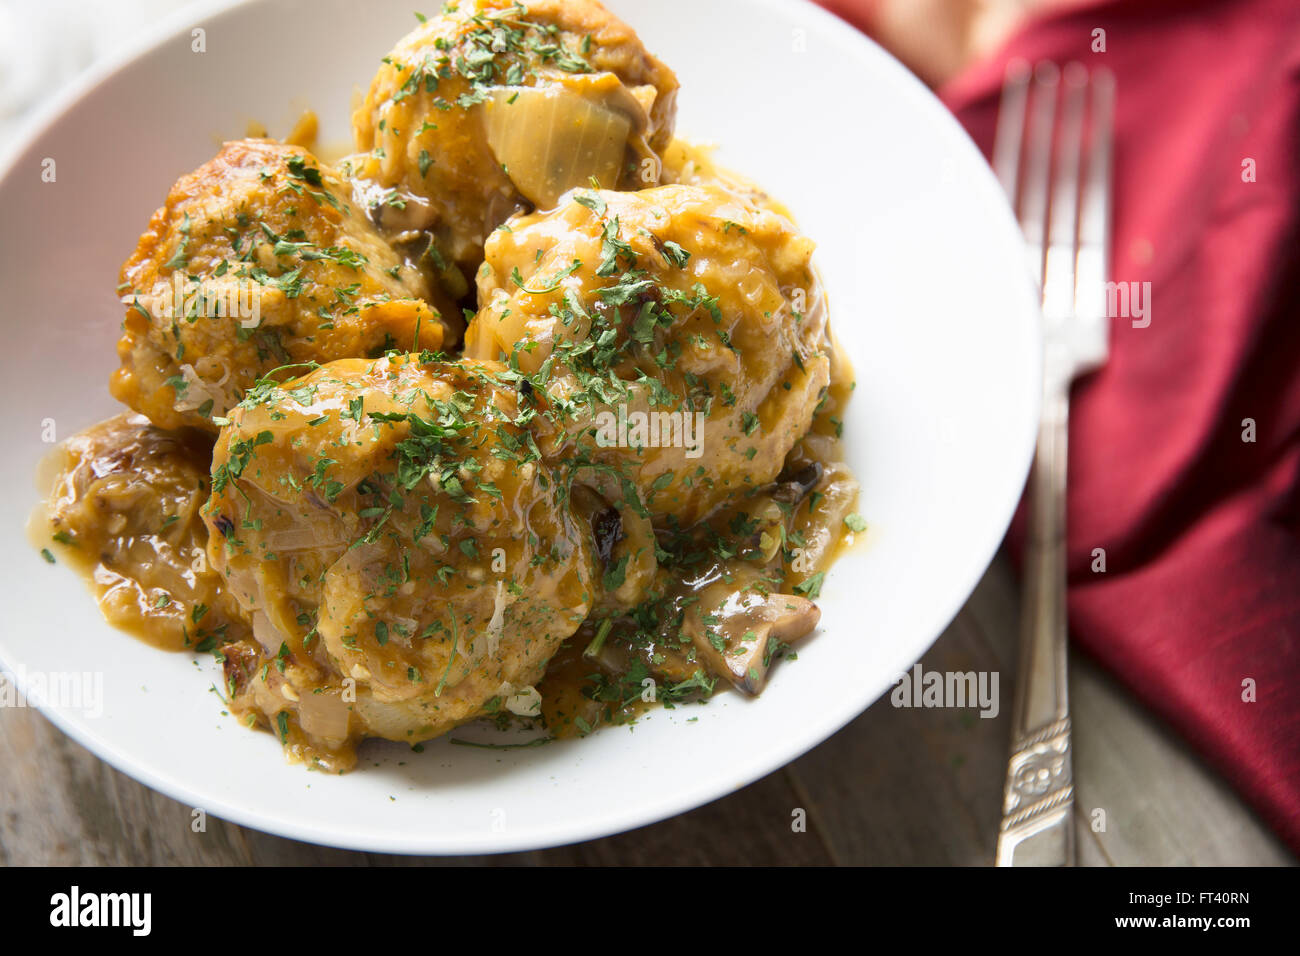 Fresh Bavarian bread dumplings with mushroom gravy sauce. Stock Photo